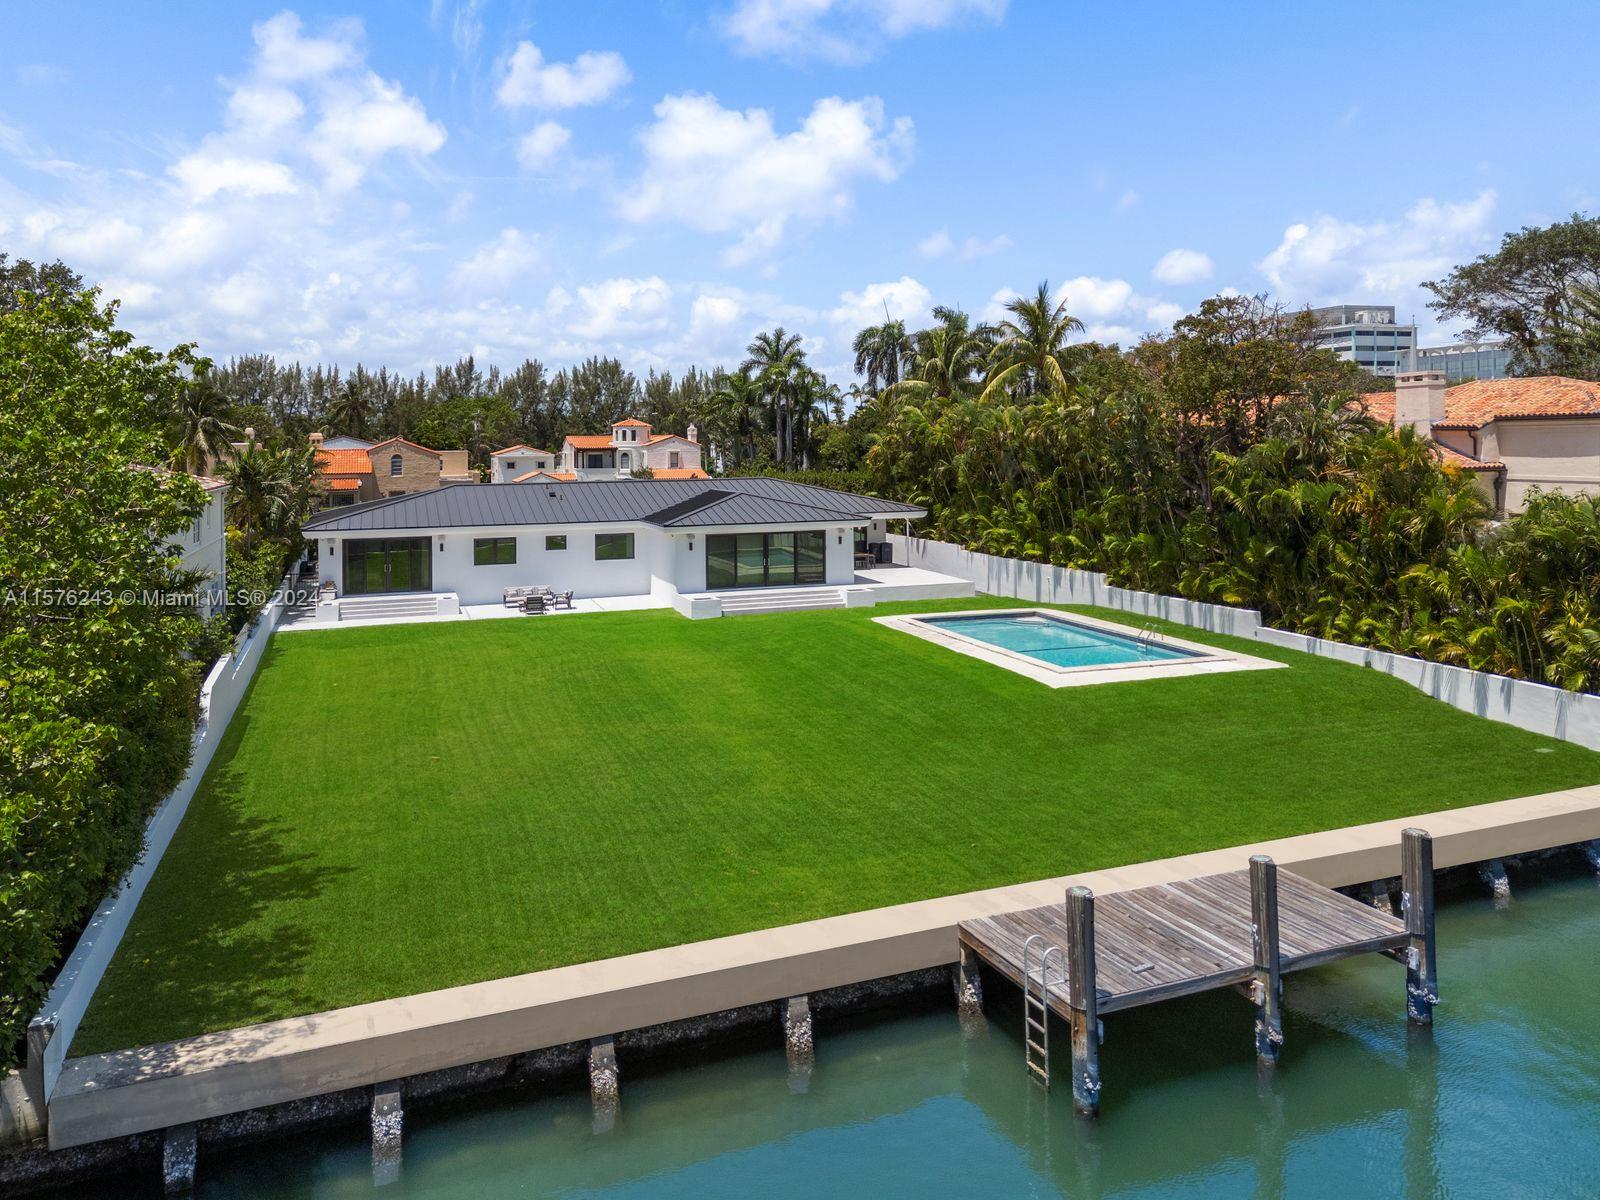 Property for Sale at 3633 Flamingo Dr, Miami Beach, Miami-Dade County, Florida - Bedrooms: 4 
Bathrooms: 4  - $11,950,000